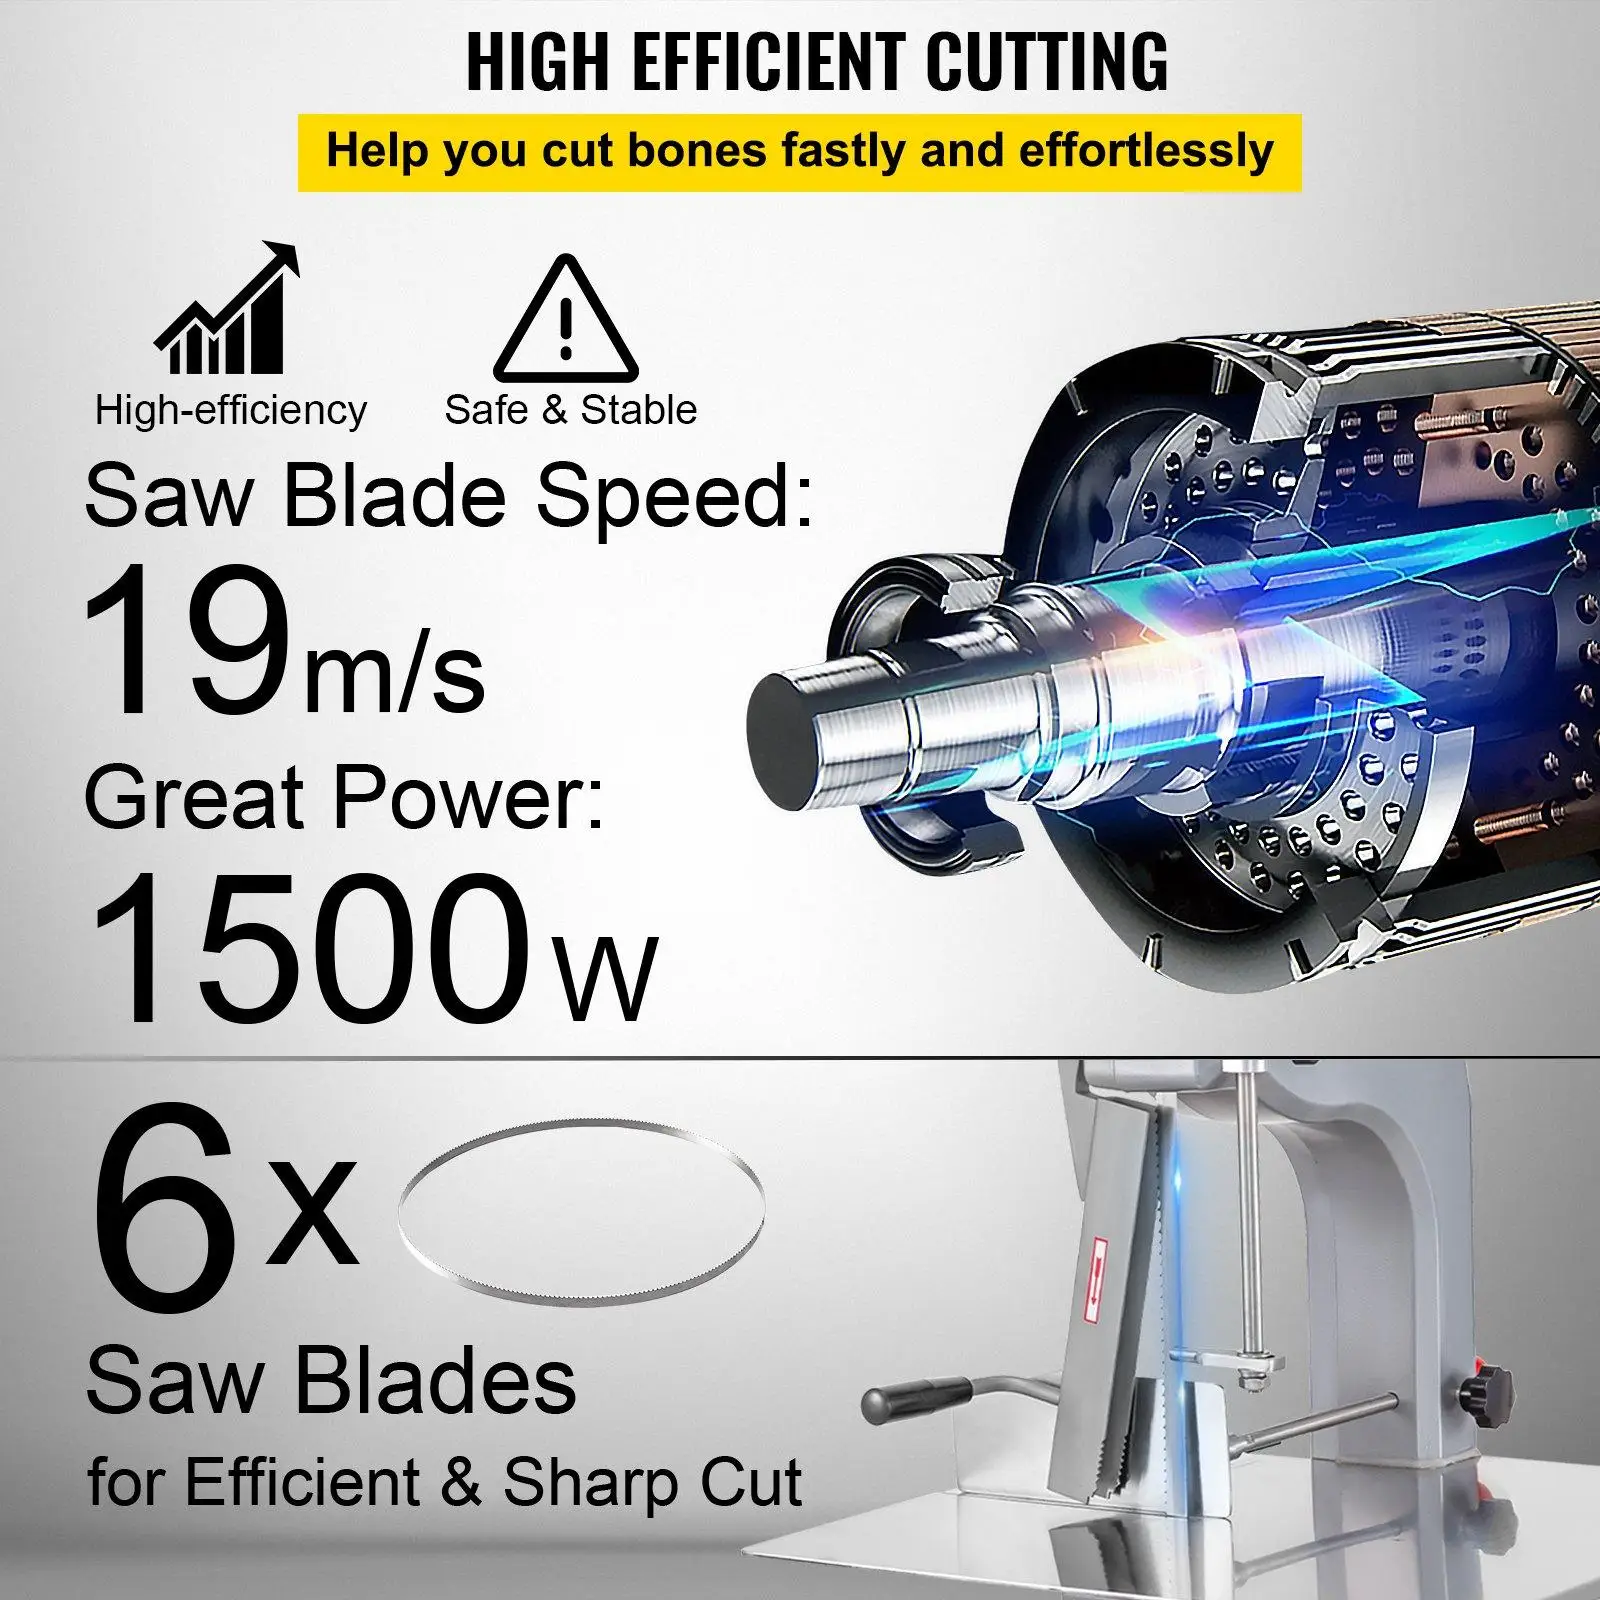 high efficient cutting